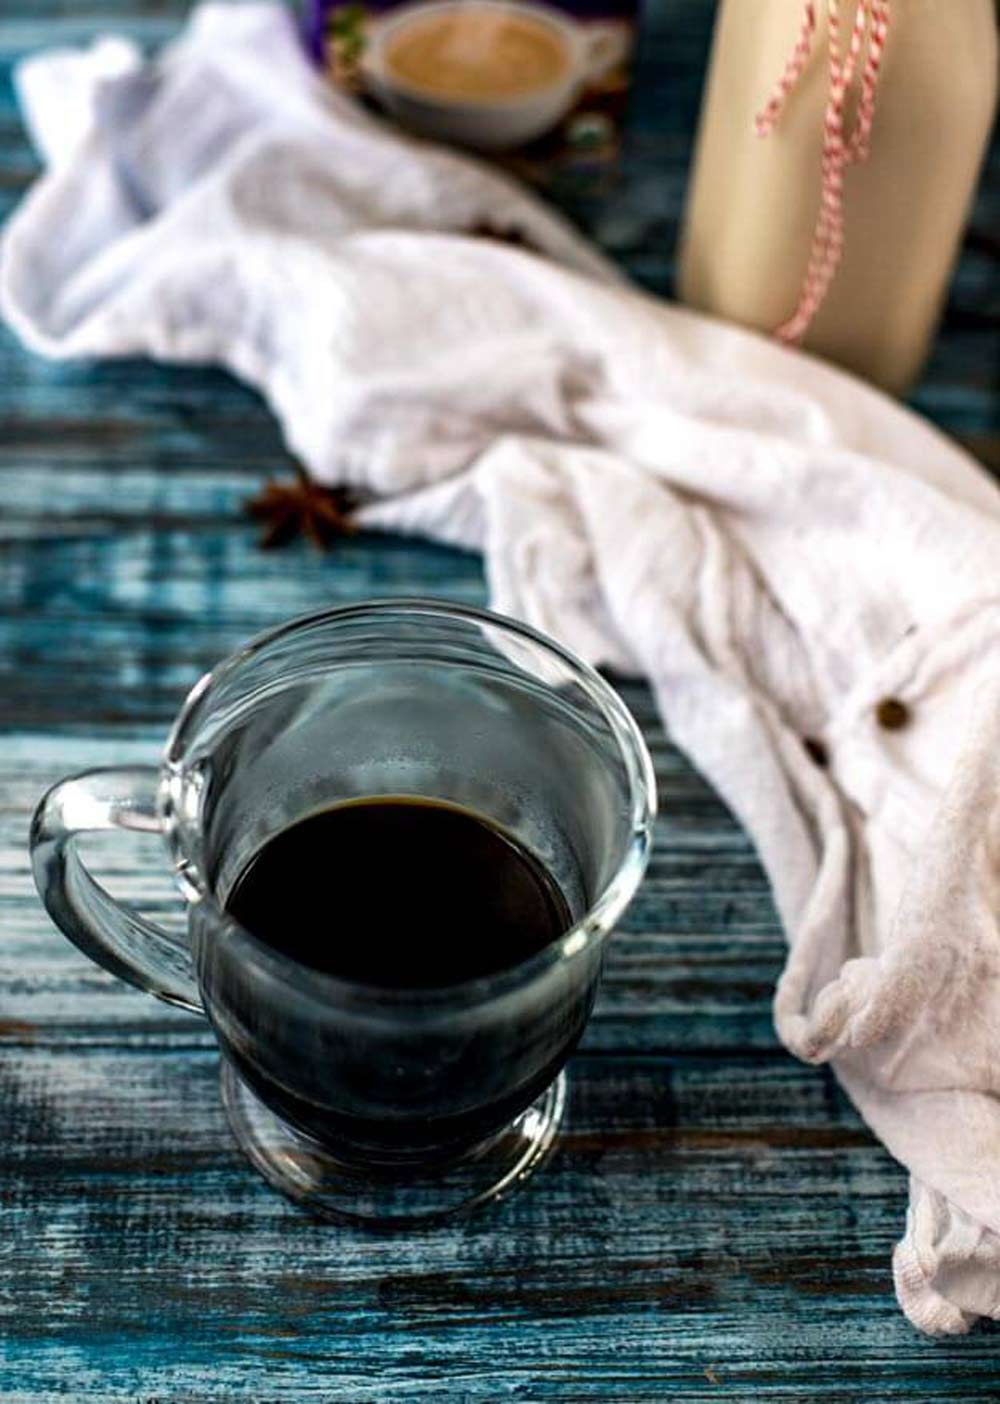 Photo of espresso in a glass mug.